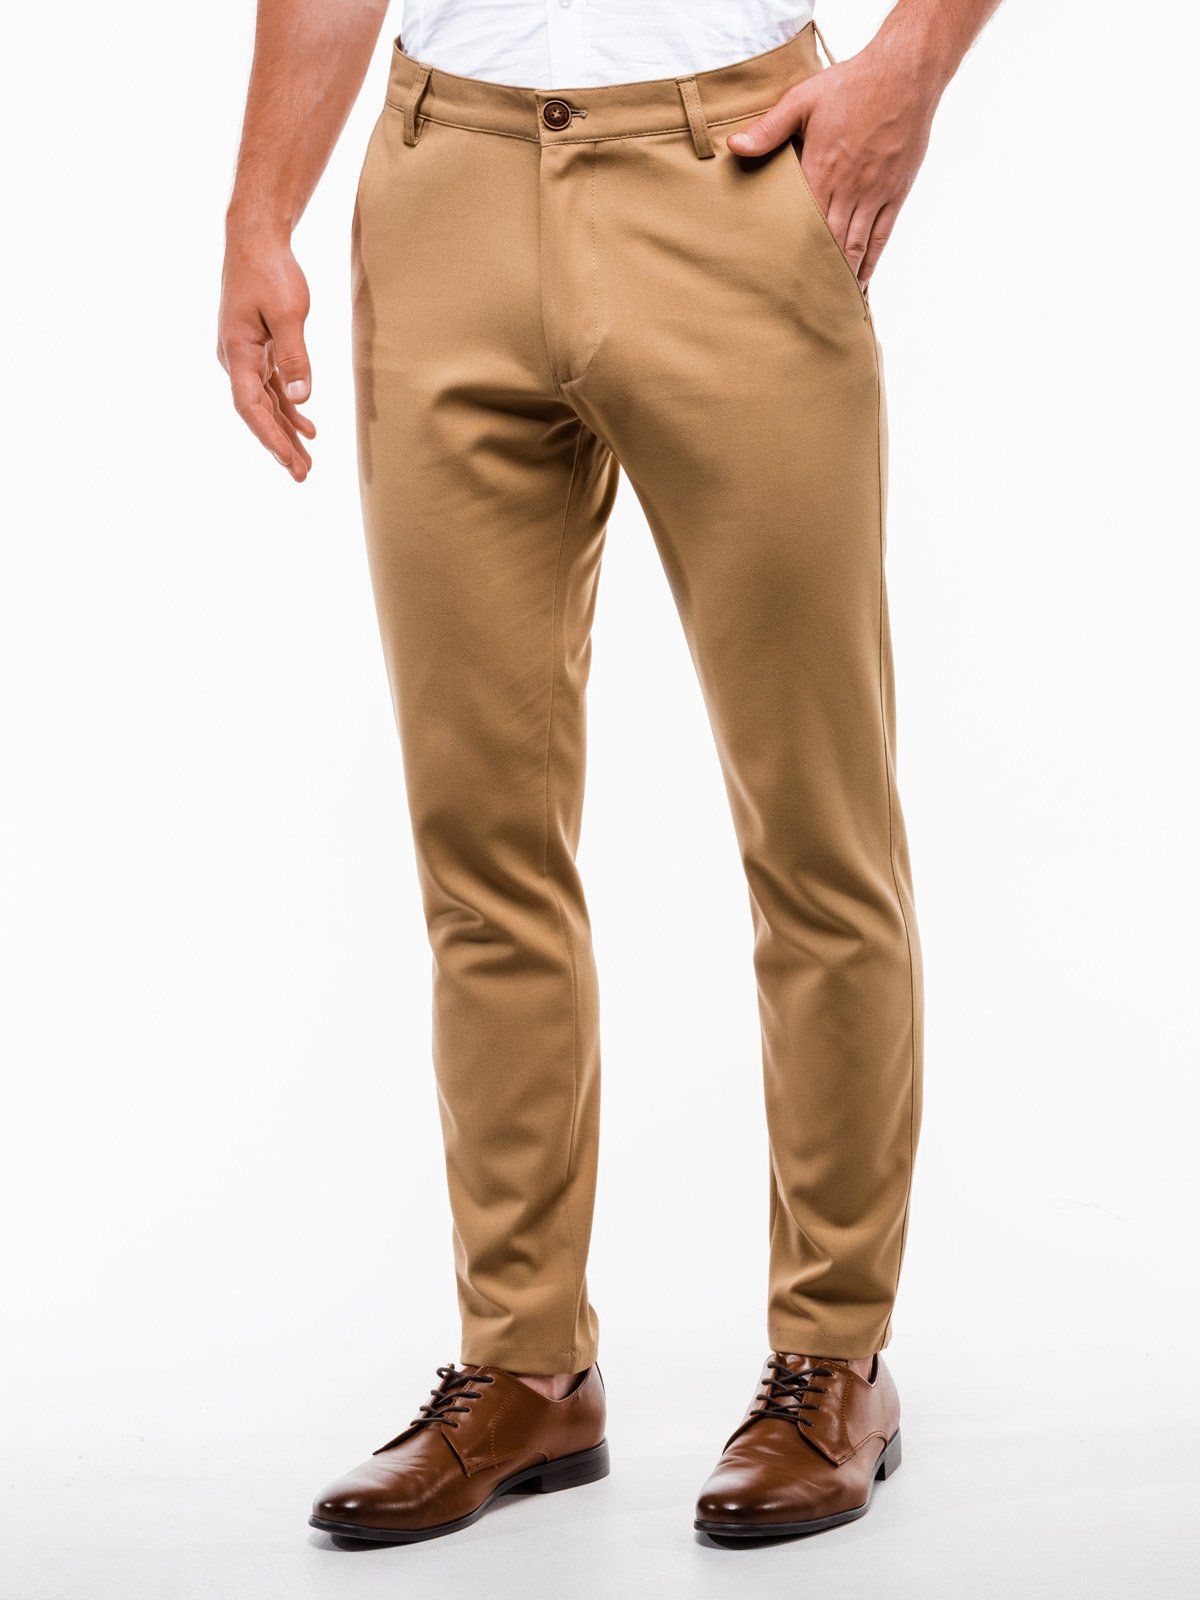 Men's pants chinos P832 - camel | MODONE wholesale - Clothing For Men